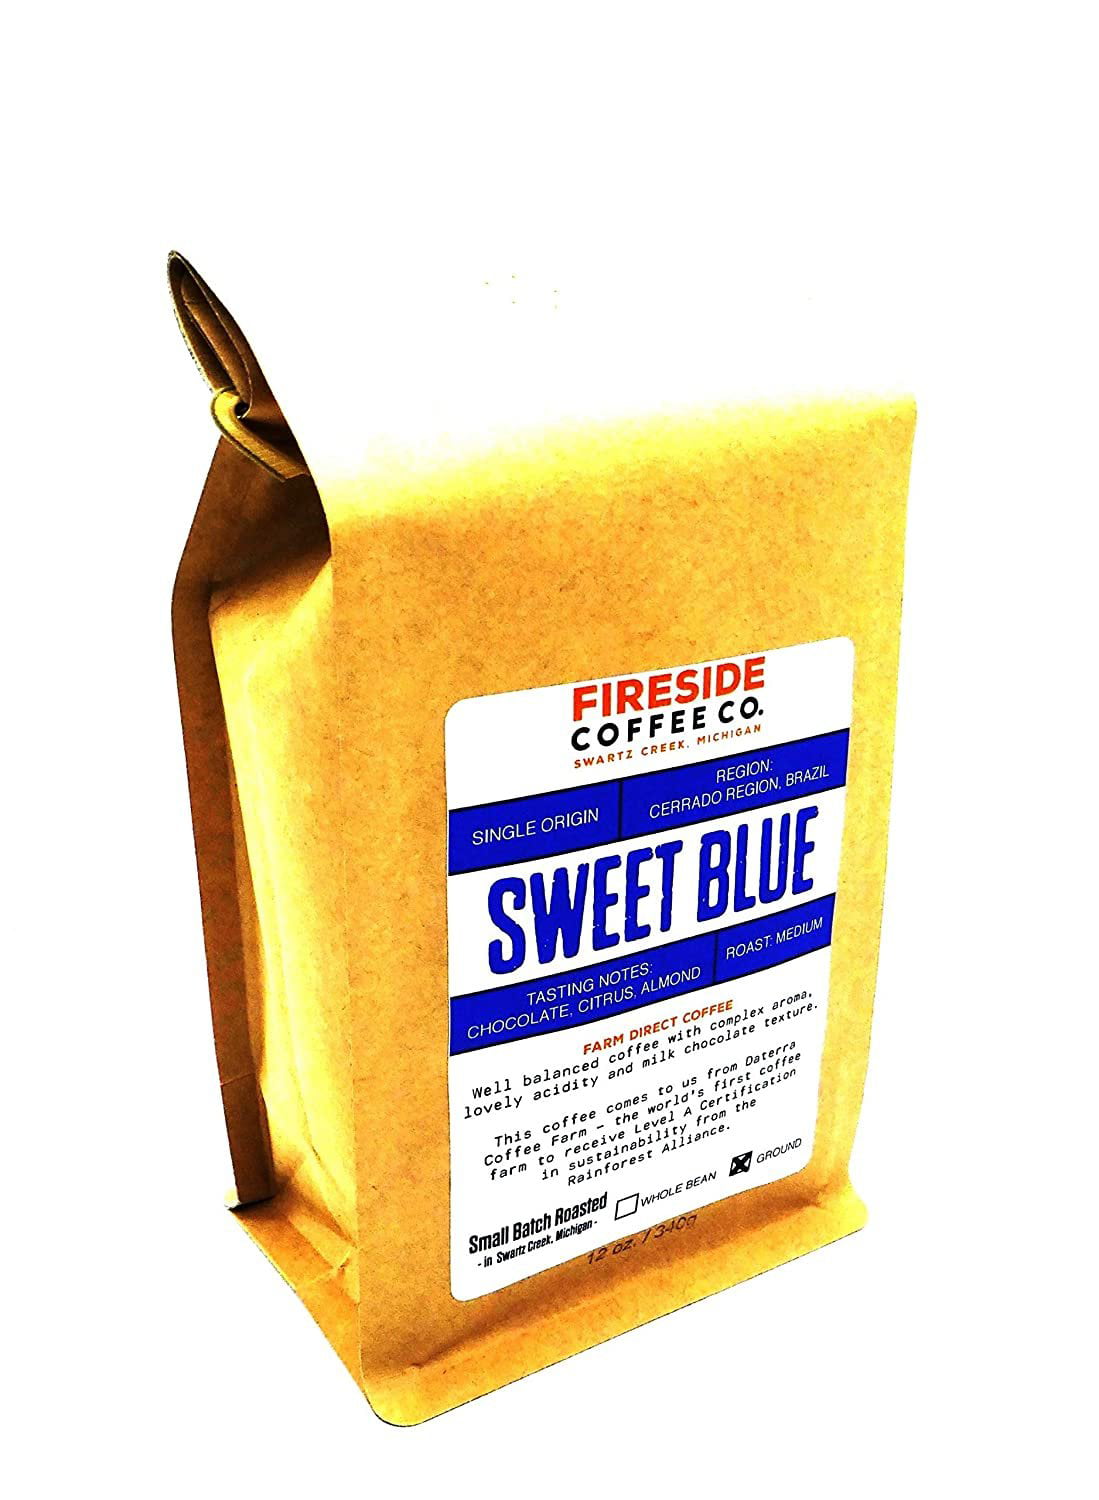 Fireside Coffee Company - Sweet Blue Coffee - 12 oz Bag- Farm Direct - Single Origin - Chocolate, Citrus, Almost - Roast: Medium - Small Batch Roasted: Ground - Sweet Blue